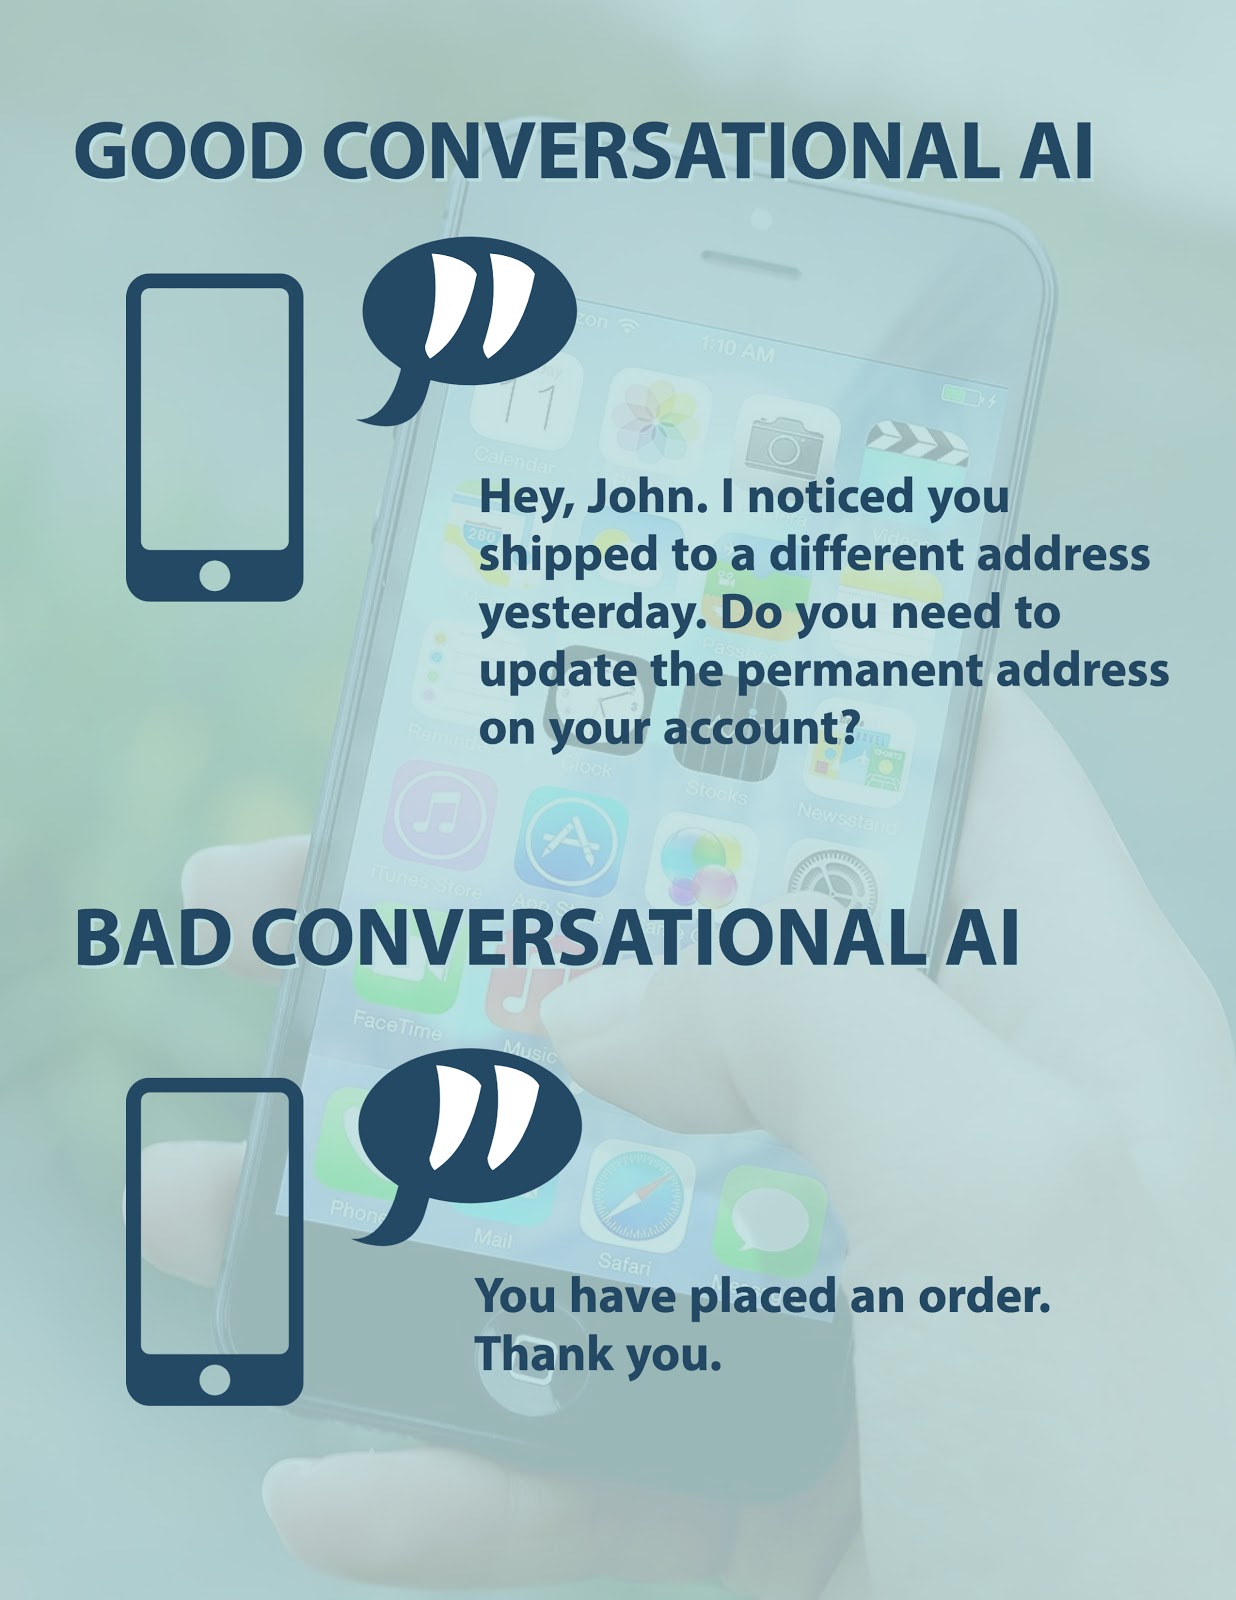 Good Conversational AI